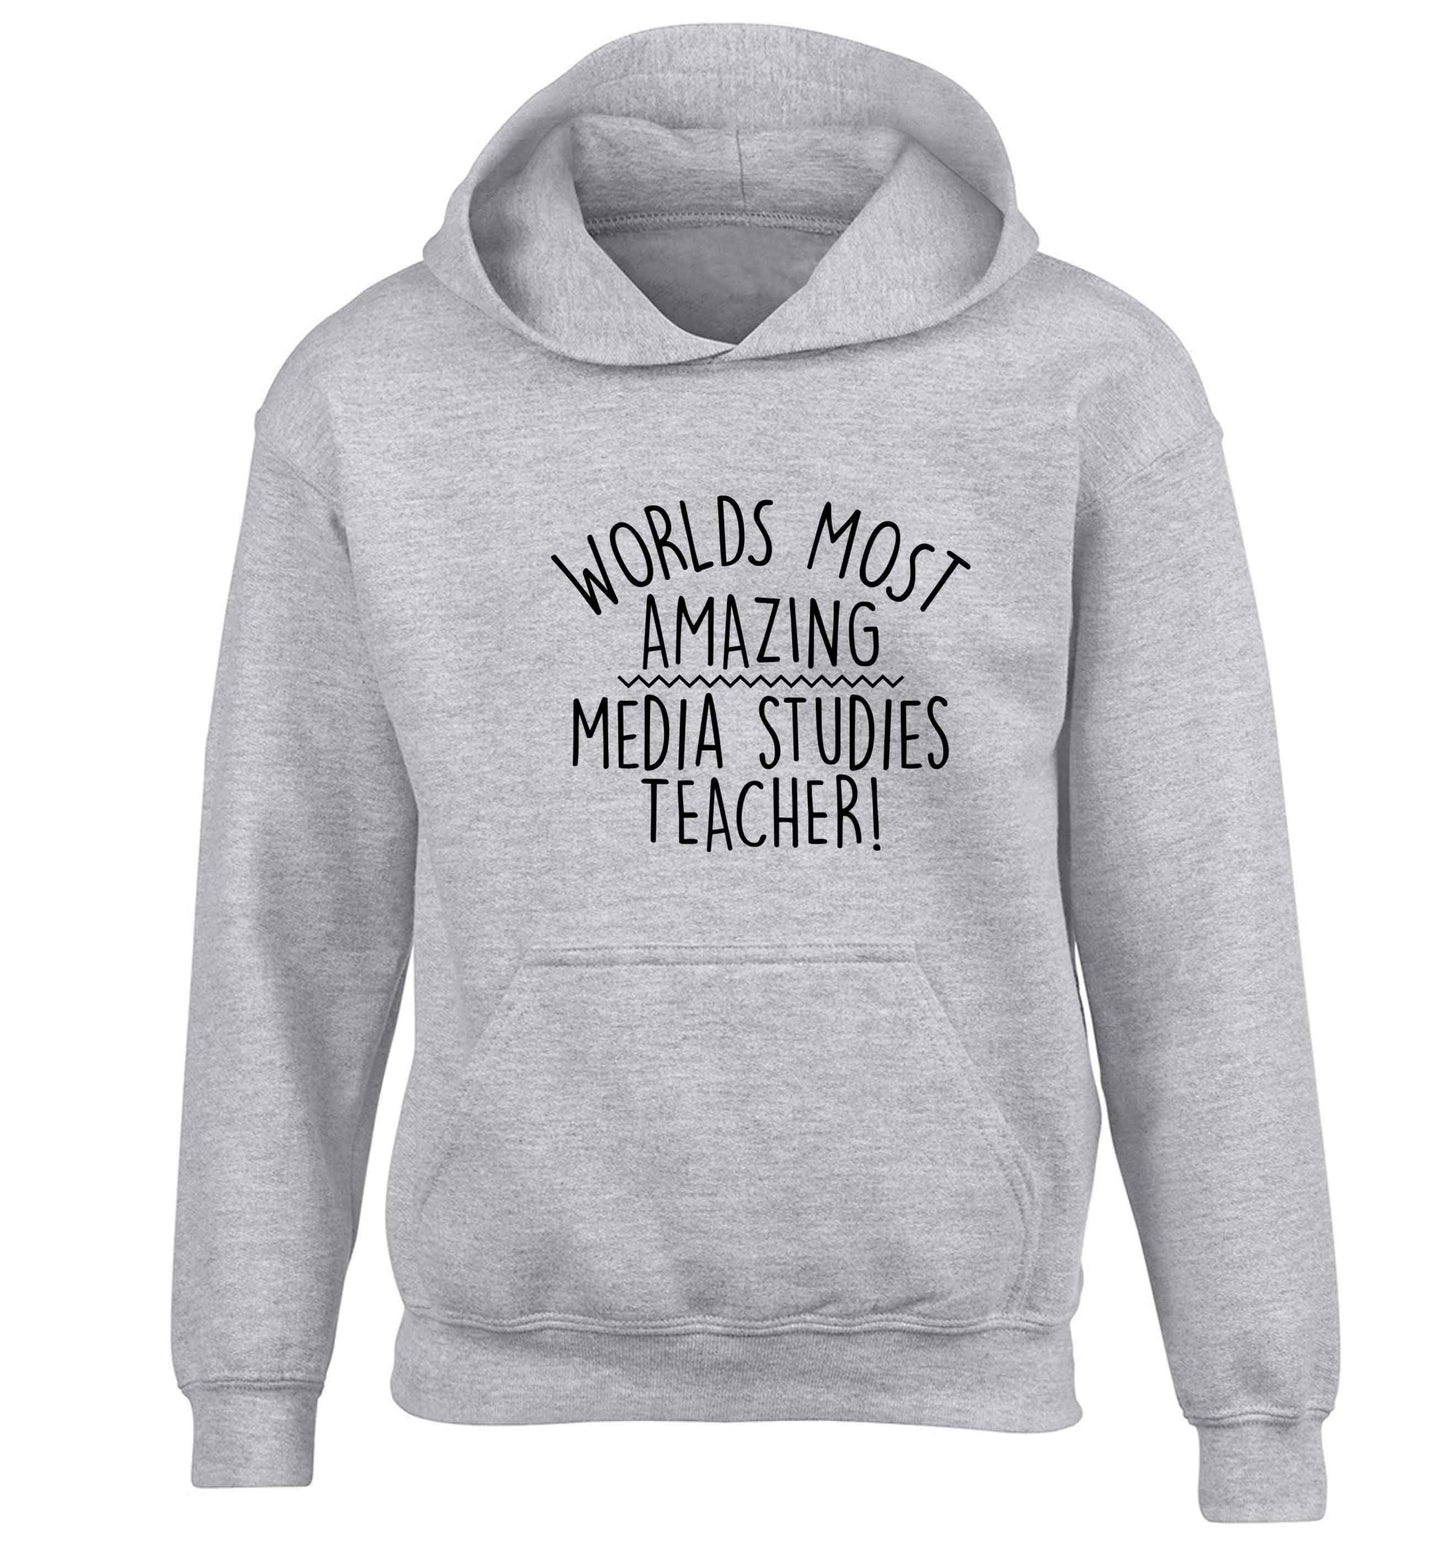 Worlds most amazing media studies teacher children's grey hoodie 12-13 Years